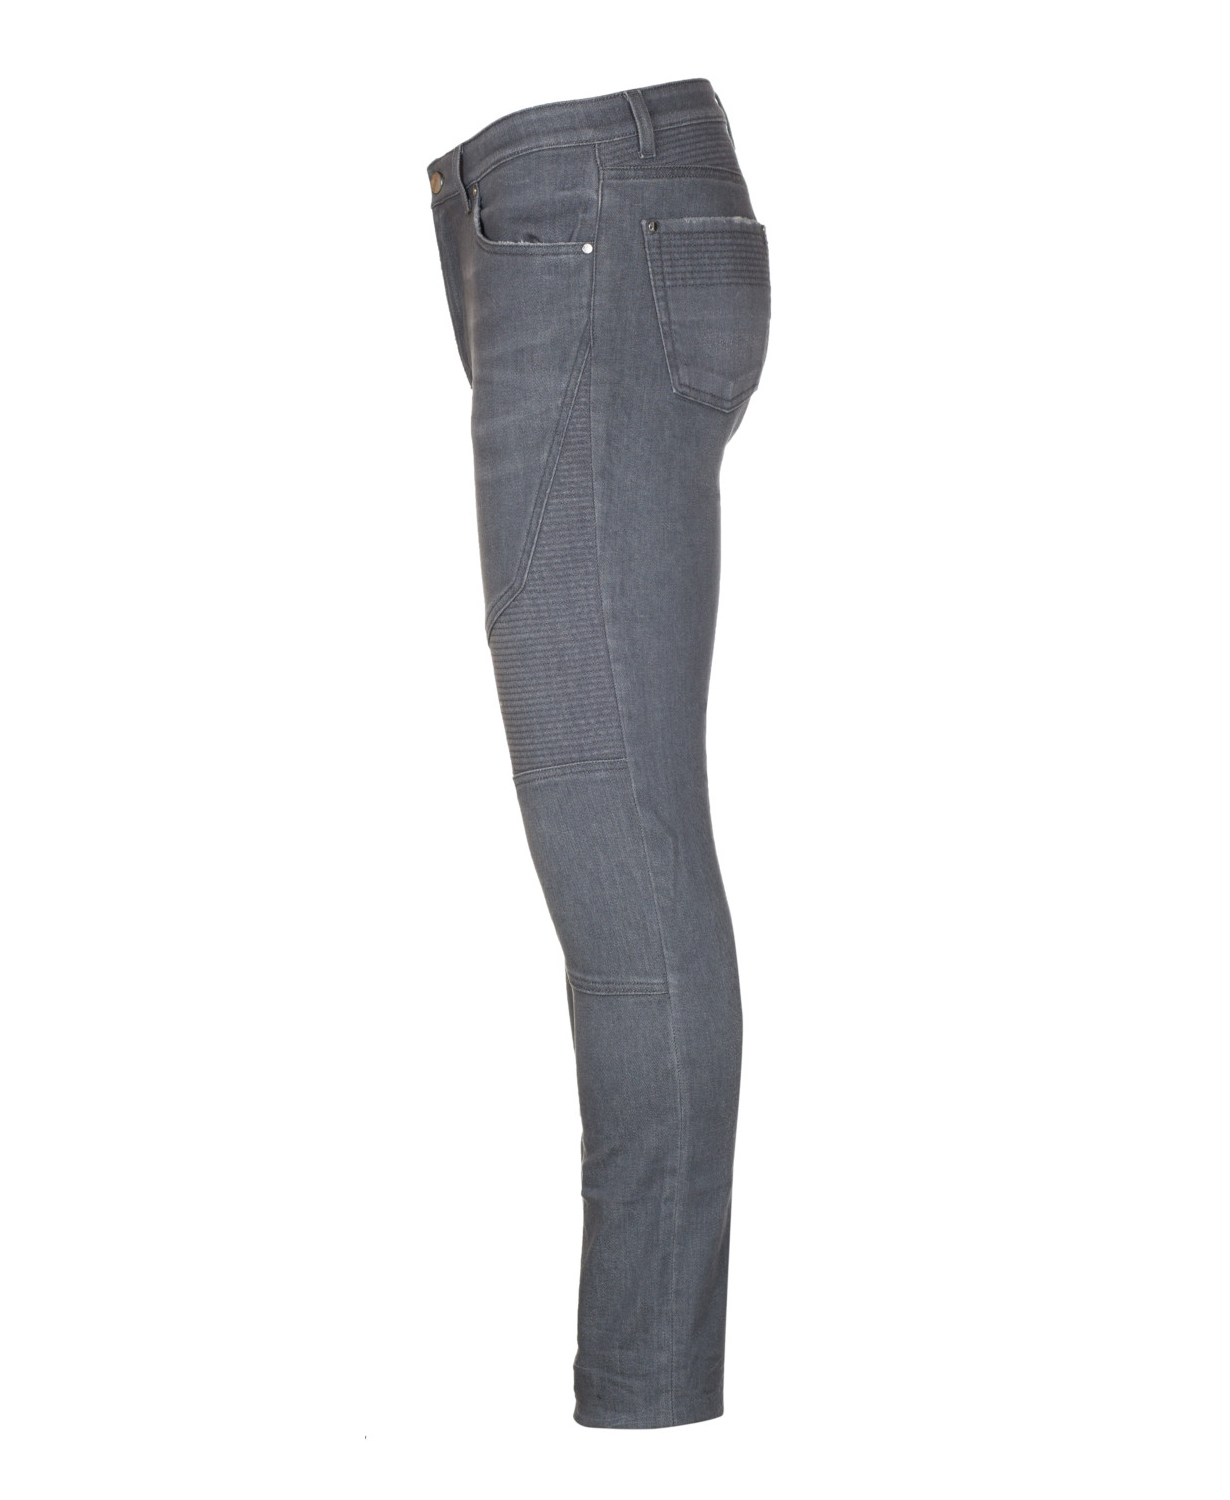 www.couturepoint.com-versace-collection-mens-gray-stretch-cotton-slim-fit-biker-denim-jeans